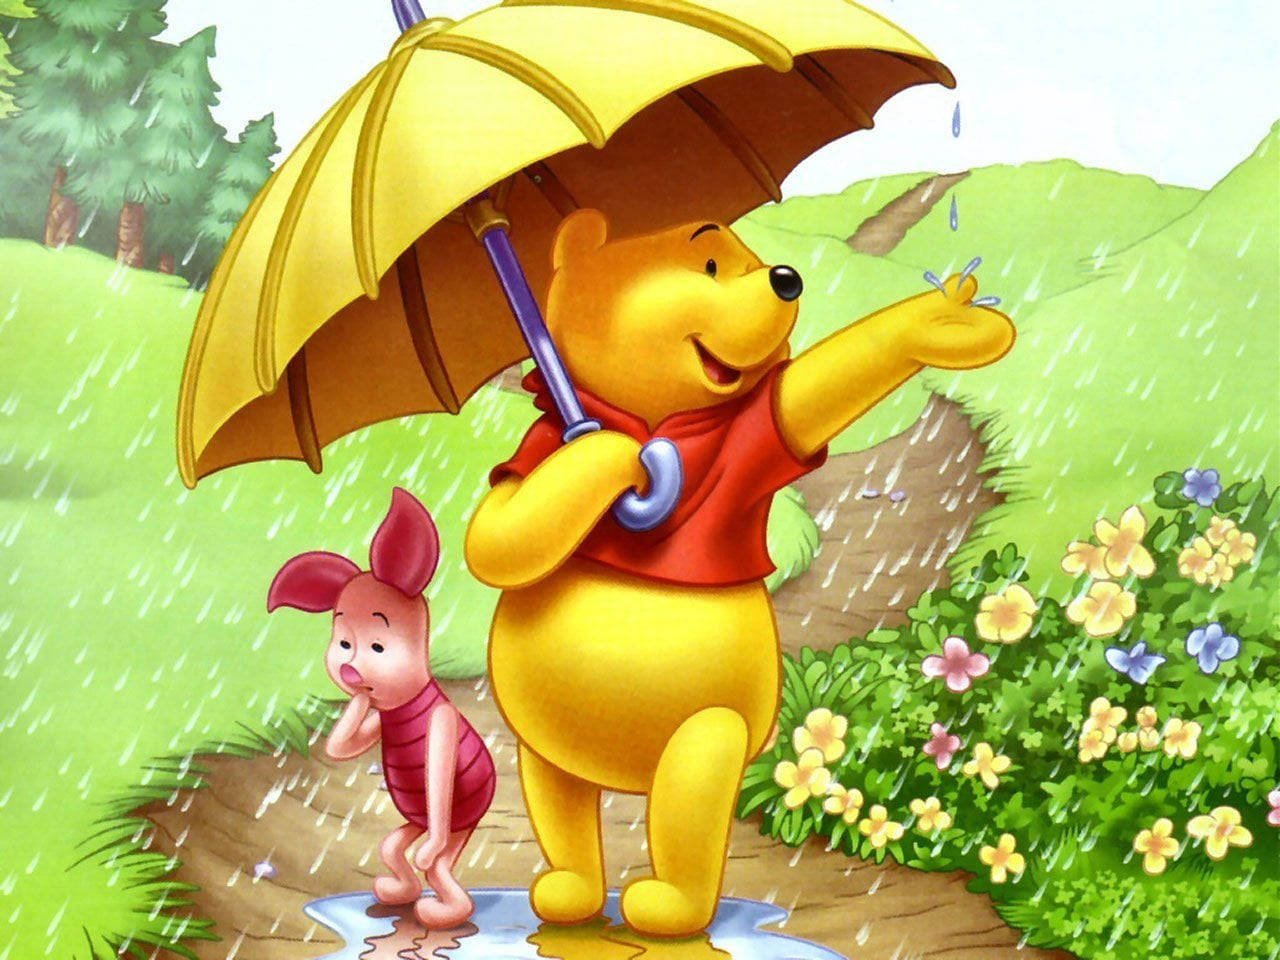 Disney Winnie The Pooh And Piglet Under An Umbrella